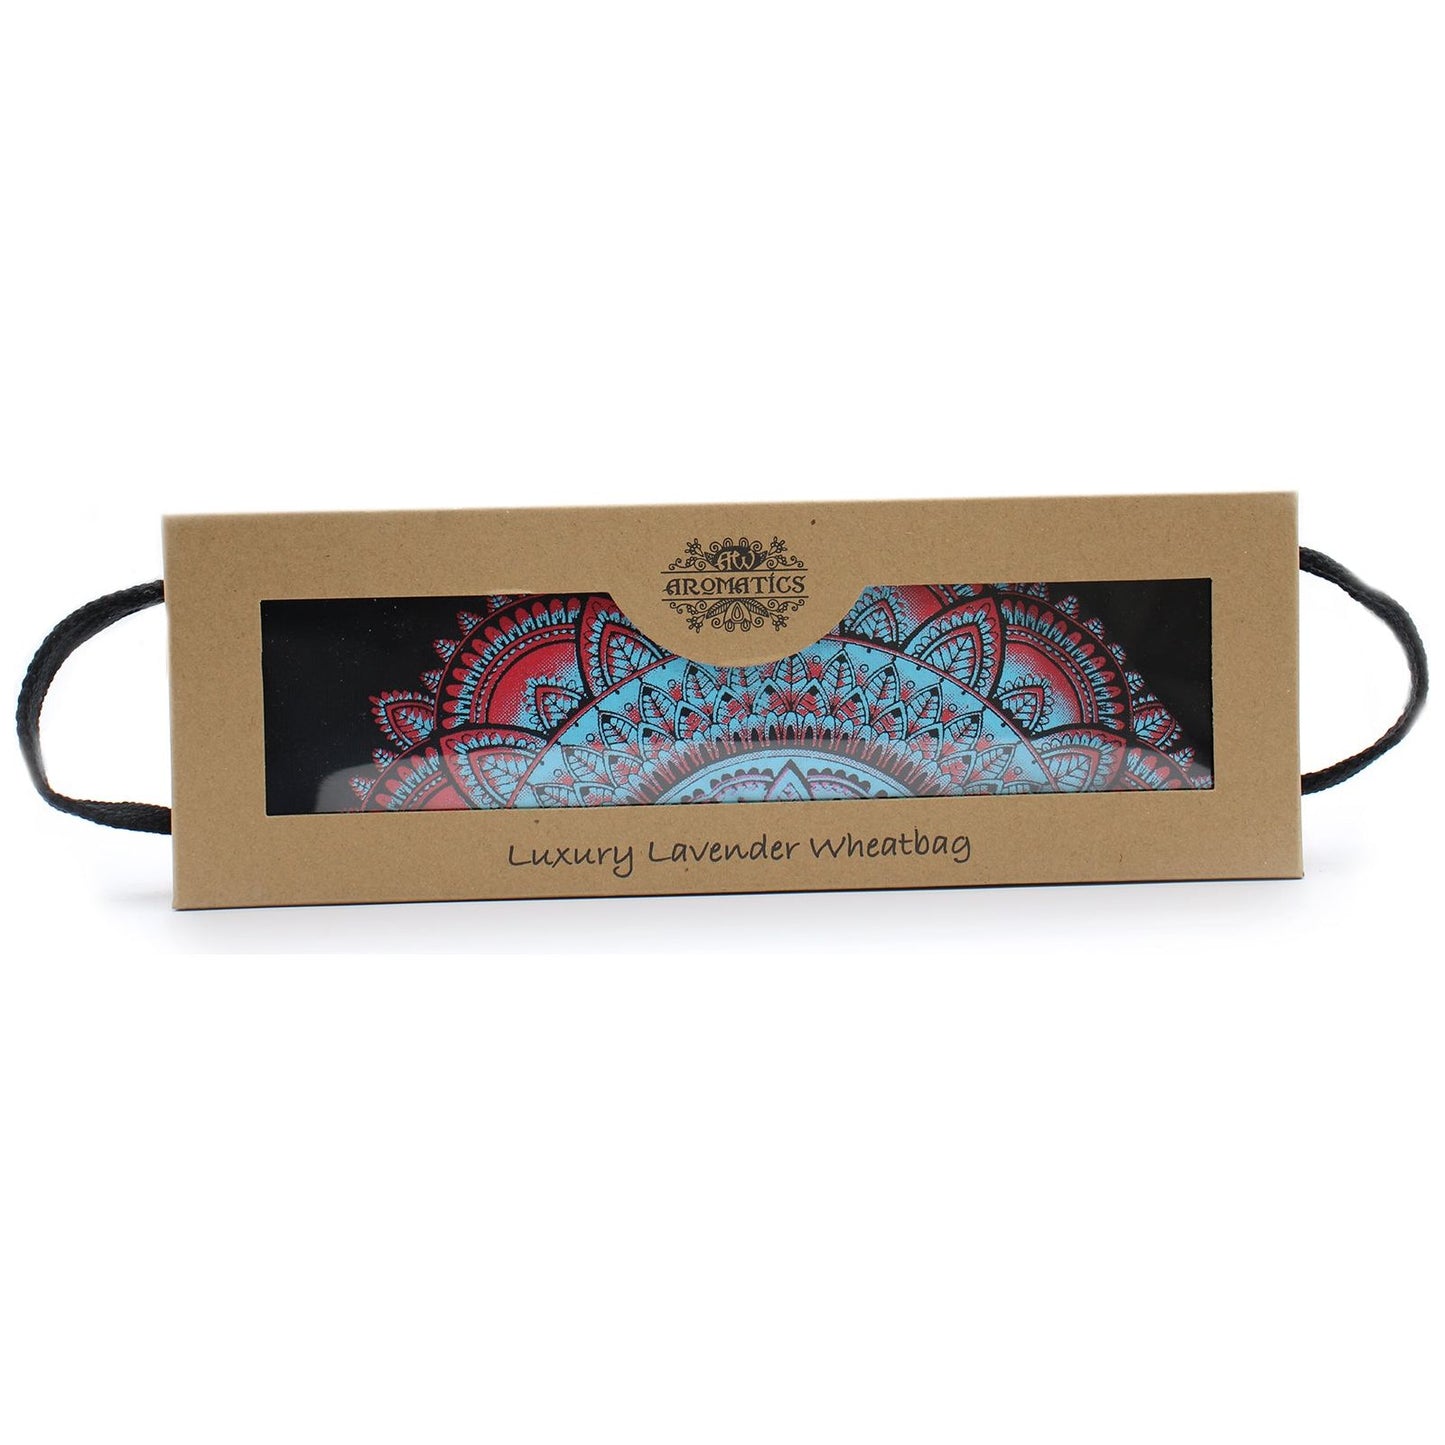 Luxury Lavender Wheat Bag in Gift Box - Mandala - Ashton and Finch